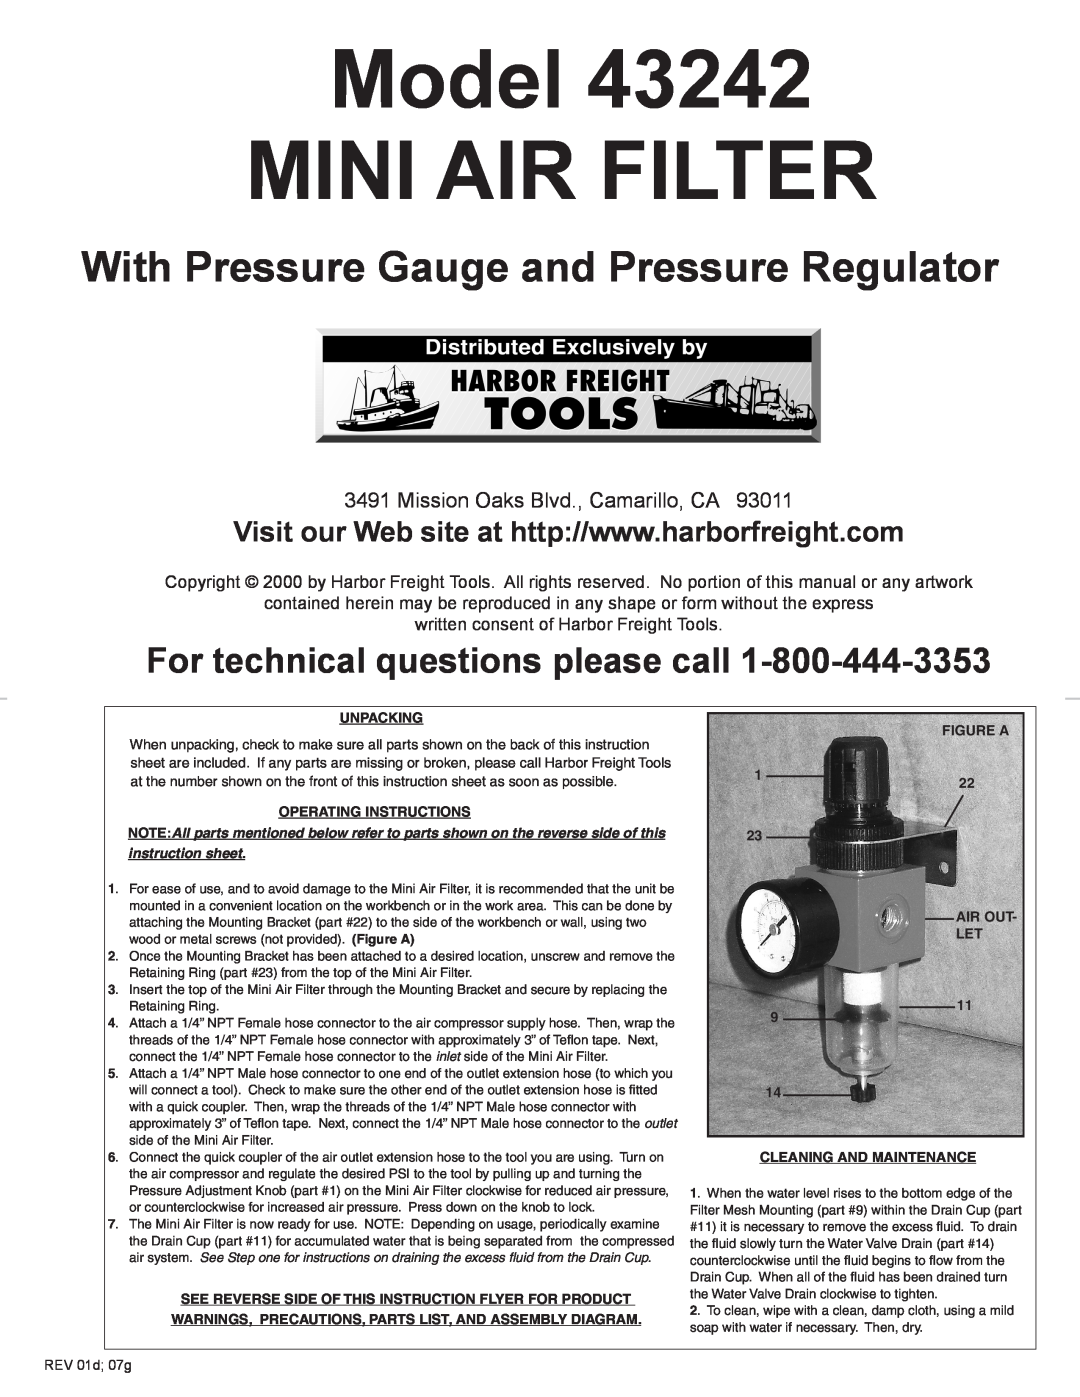 Harbor Freight Tools 43242 instruction sheet Model MINI AIR FILTER, With Pressure Gauge and Pressure Regulator 